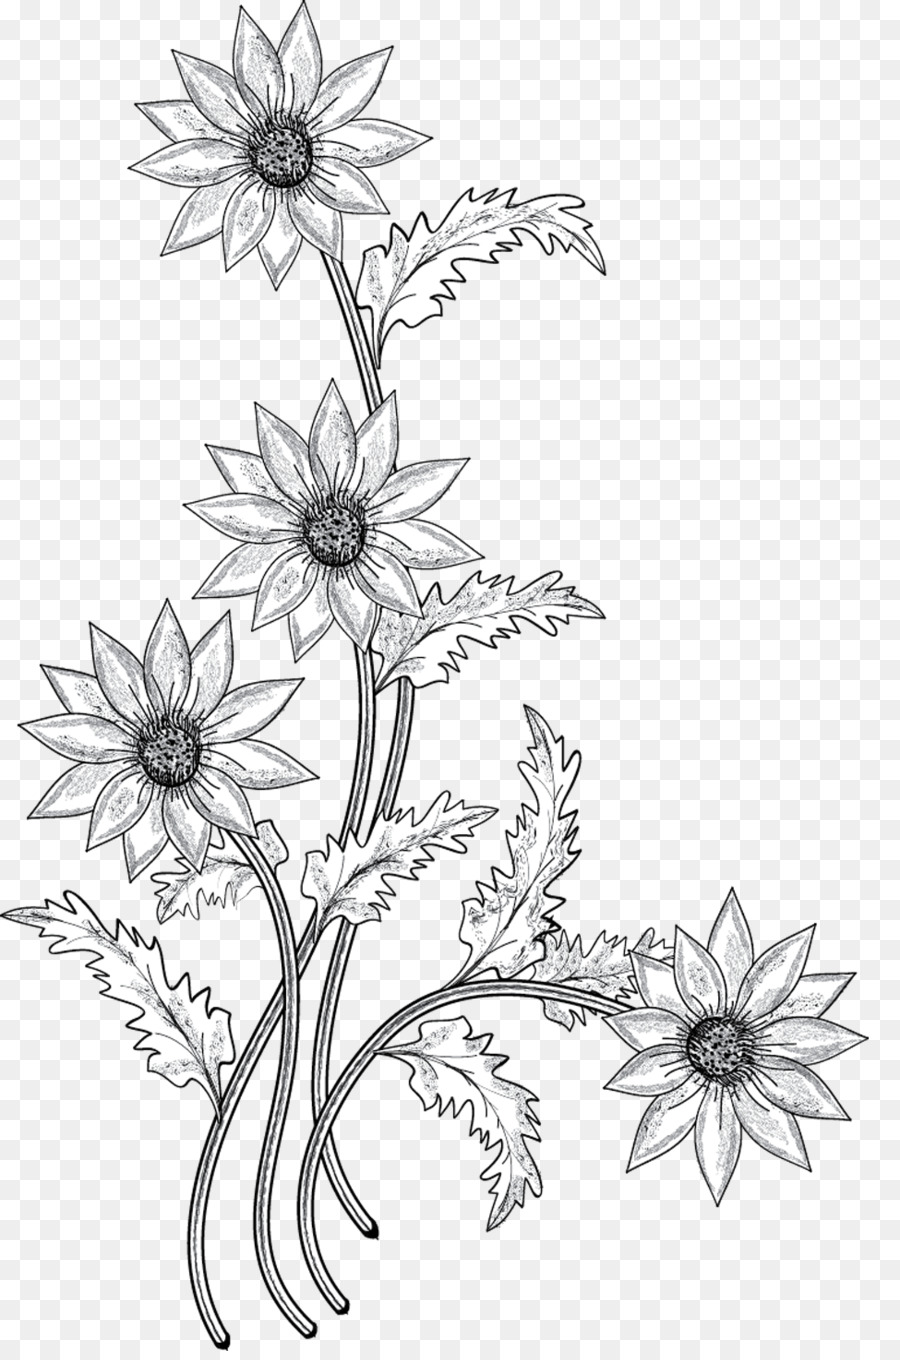 Flower Drawing Clip art - flower Drawing png download - 900*1351 - Free Transparent Flower png Download.